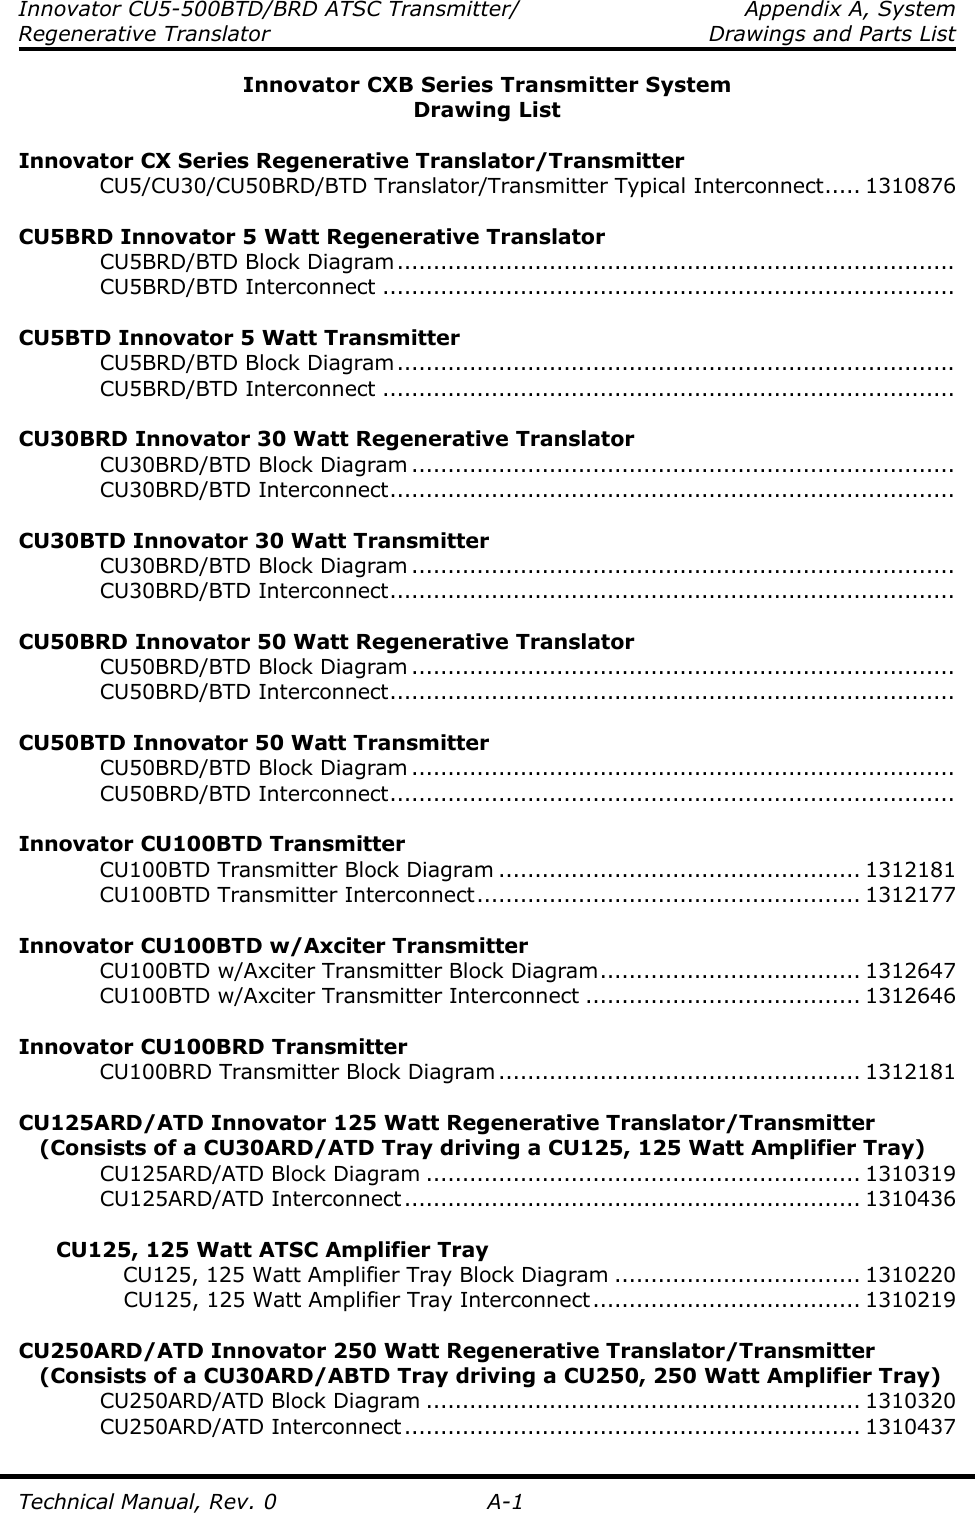 Innovator CU5-500BTD/BRD ATSC Transmitter/  Appendix A, System Regenerative Translator    Drawings and Parts List  Technical Manual, Rev. 0  A-1 Innovator CXB Series Transmitter System Drawing List  Innovator CX Series Regenerative Translator/Transmitter     CU5/CU30/CU50BRD/BTD Translator/Transmitter Typical Interconnect..... 1310876  CU5BRD Innovator 5 Watt Regenerative Translator     CU5BRD/BTD Block Diagram.............................................................................     CU5BRD/BTD Interconnect ...............................................................................  CU5BTD Innovator 5 Watt Transmitter     CU5BRD/BTD Block Diagram.............................................................................     CU5BRD/BTD Interconnect ...............................................................................  CU30BRD Innovator 30 Watt Regenerative Translator     CU30BRD/BTD Block Diagram ...........................................................................     CU30BRD/BTD Interconnect..............................................................................  CU30BTD Innovator 30 Watt Transmitter     CU30BRD/BTD Block Diagram ...........................................................................     CU30BRD/BTD Interconnect..............................................................................    CU50BRD Innovator 50 Watt Regenerative Translator     CU50BRD/BTD Block Diagram ...........................................................................     CU50BRD/BTD Interconnect..............................................................................  CU50BTD Innovator 50 Watt Transmitter     CU50BRD/BTD Block Diagram ...........................................................................     CU50BRD/BTD Interconnect..............................................................................      Innovator CU100BTD Transmitter     CU100BTD Transmitter Block Diagram .................................................. 1312181     CU100BTD Transmitter Interconnect..................................................... 1312177  Innovator CU100BTD w/Axciter Transmitter     CU100BTD w/Axciter Transmitter Block Diagram.................................... 1312647     CU100BTD w/Axciter Transmitter Interconnect ...................................... 1312646    Innovator CU100BRD Transmitter     CU100BRD Transmitter Block Diagram.................................................. 1312181  CU125ARD/ATD Innovator 125 Watt Regenerative Translator/Transmitter    (Consists of a CU30ARD/ATD Tray driving a CU125, 125 Watt Amplifier Tray)     CU125ARD/ATD Block Diagram ............................................................ 1310319     CU125ARD/ATD Interconnect............................................................... 1310436     CU125, 125 Watt ATSC Amplifier Tray       CU125, 125 Watt Amplifier Tray Block Diagram .................................. 1310220       CU125, 125 Watt Amplifier Tray Interconnect..................................... 1310219  CU250ARD/ATD Innovator 250 Watt Regenerative Translator/Transmitter    (Consists of a CU30ARD/ABTD Tray driving a CU250, 250 Watt Amplifier Tray)     CU250ARD/ATD Block Diagram ............................................................ 1310320     CU250ARD/ATD Interconnect............................................................... 1310437      